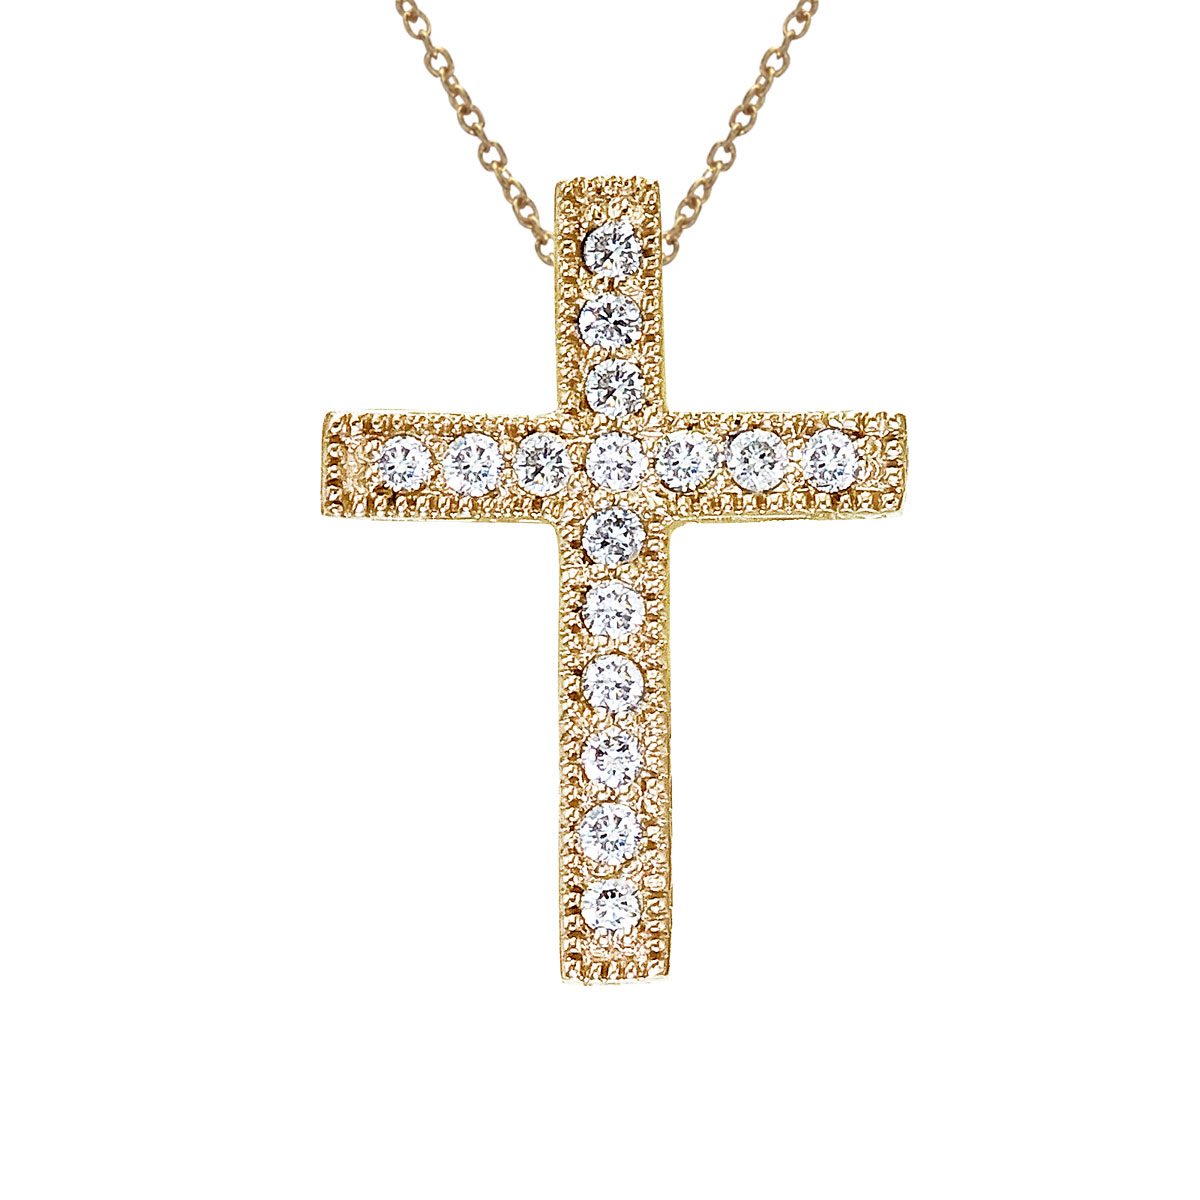 JCX2992: .16 ct diamond cross pendant set in 14k yellow gold.